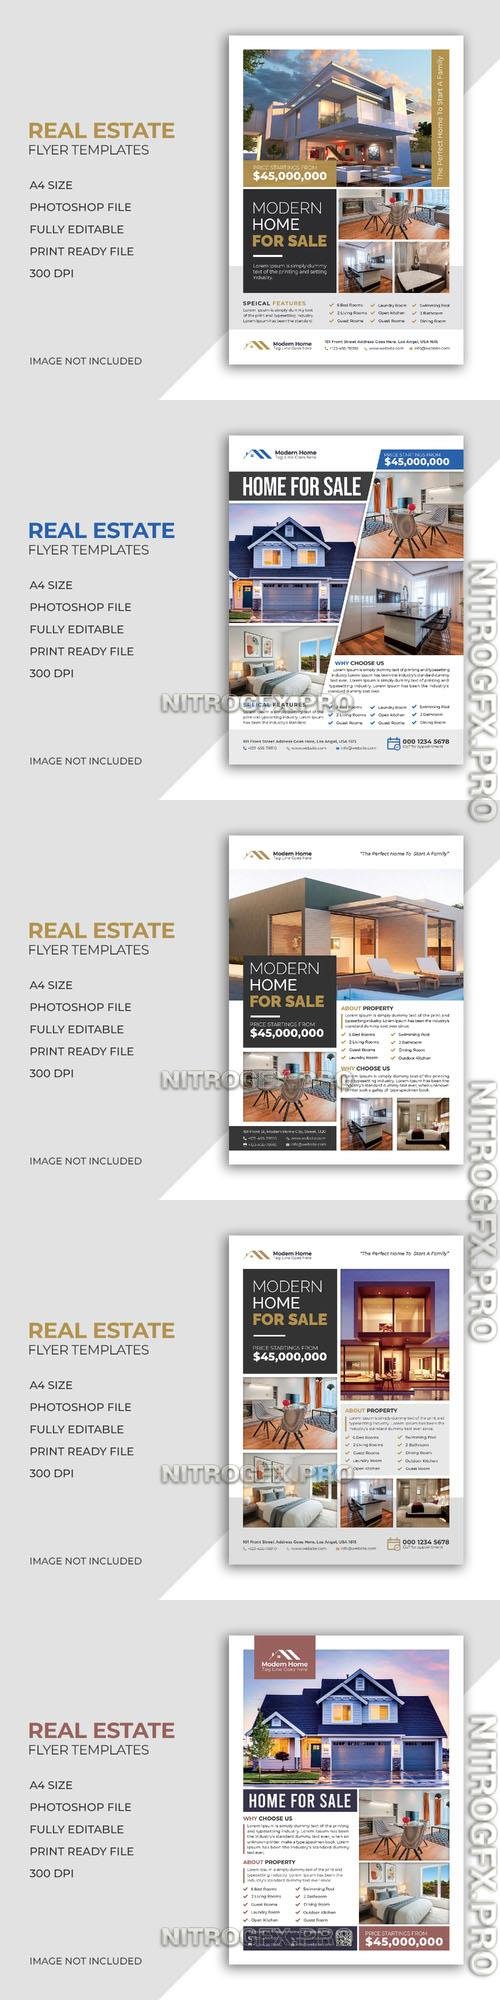 Real estate psd flyer design template